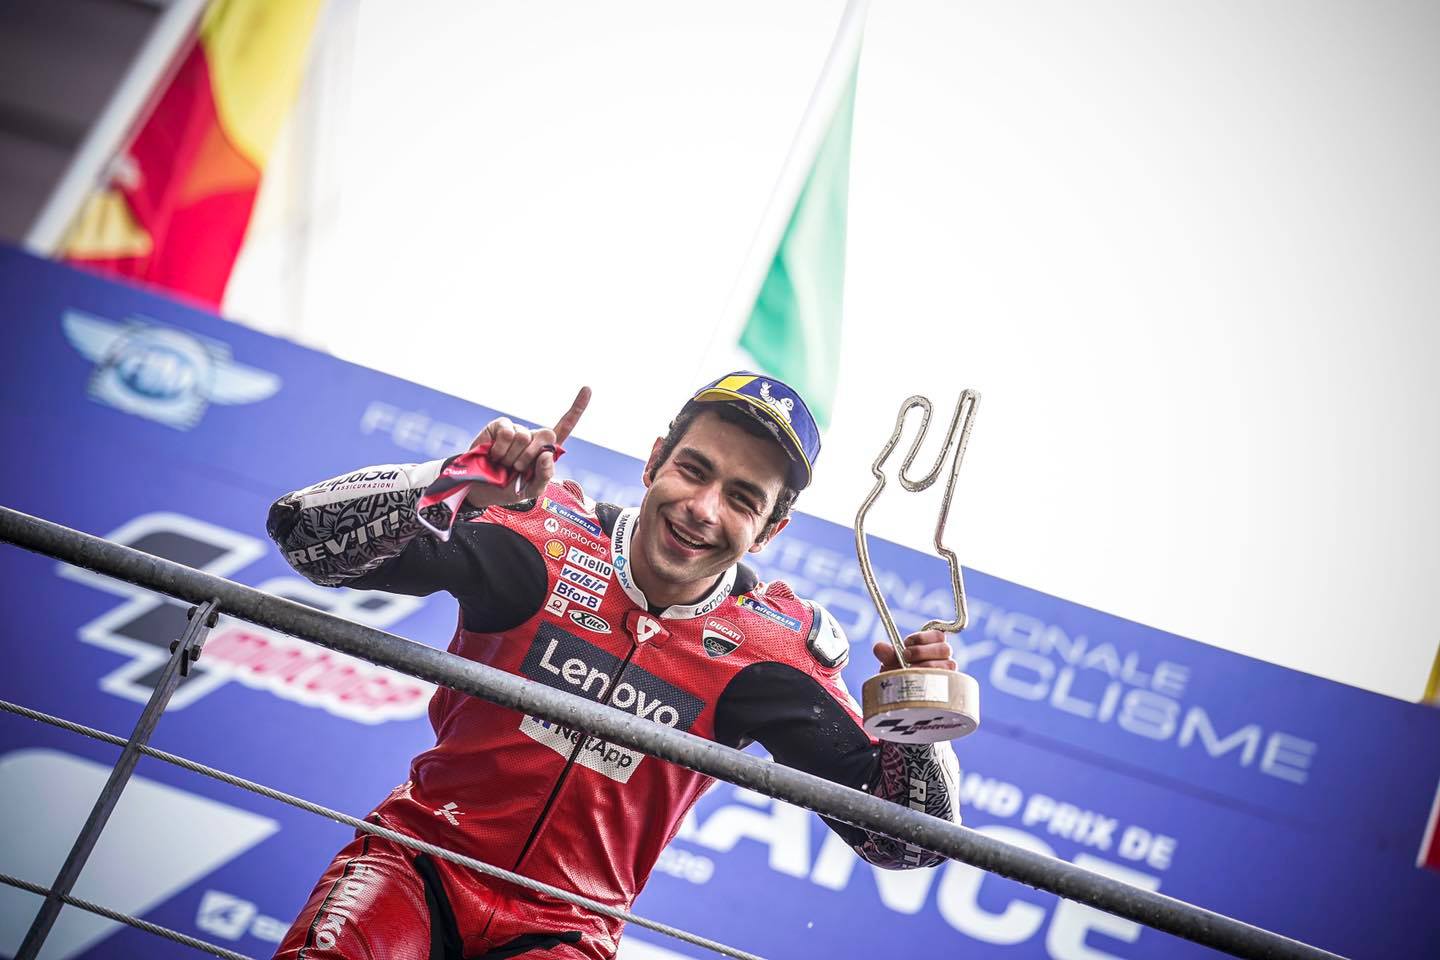 Petrucci on Ducati wins the 2020 French Gp